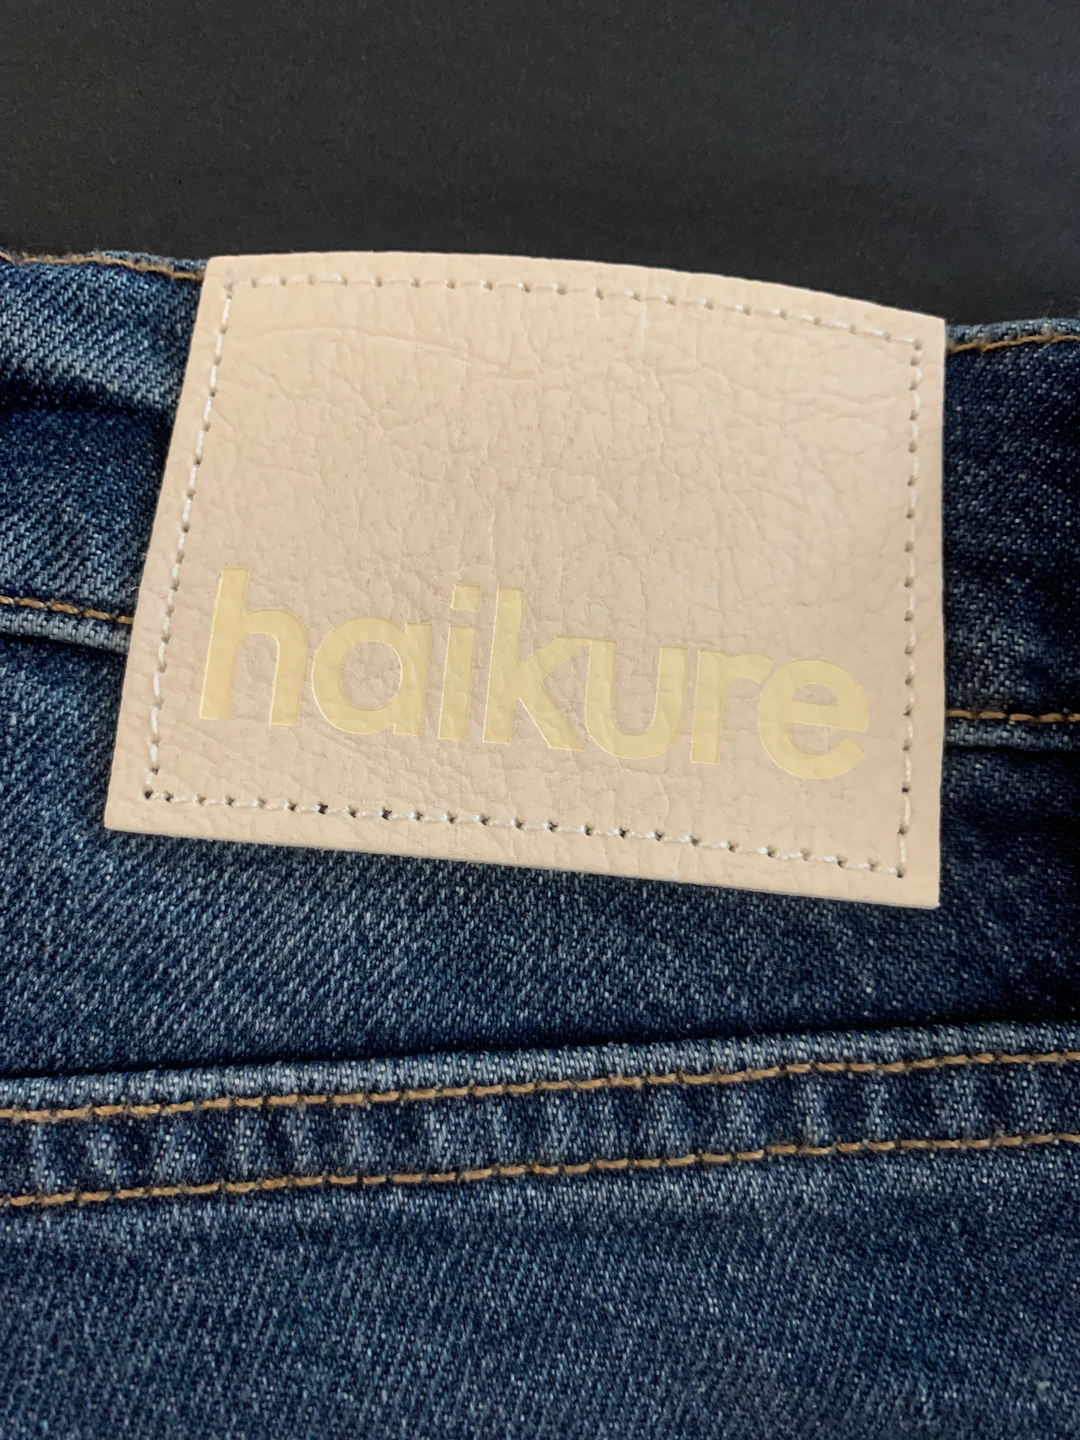 Haikure - Tokyo Double Crop Old Comfort Denim Dark Blue | Buster McGee